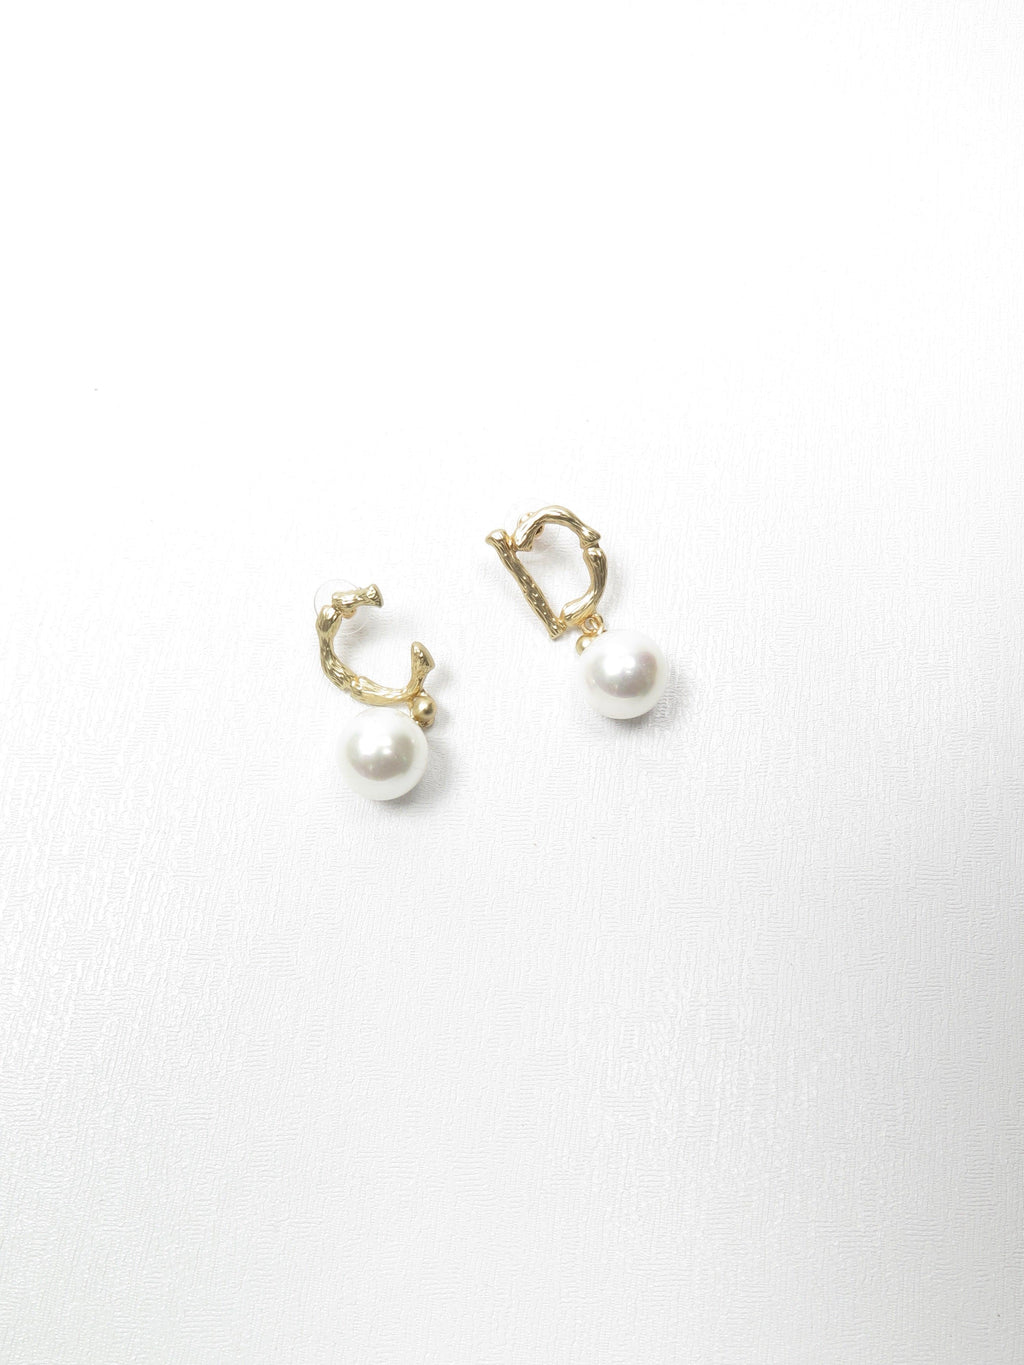 Designer Style Gold & Pearl Earrings